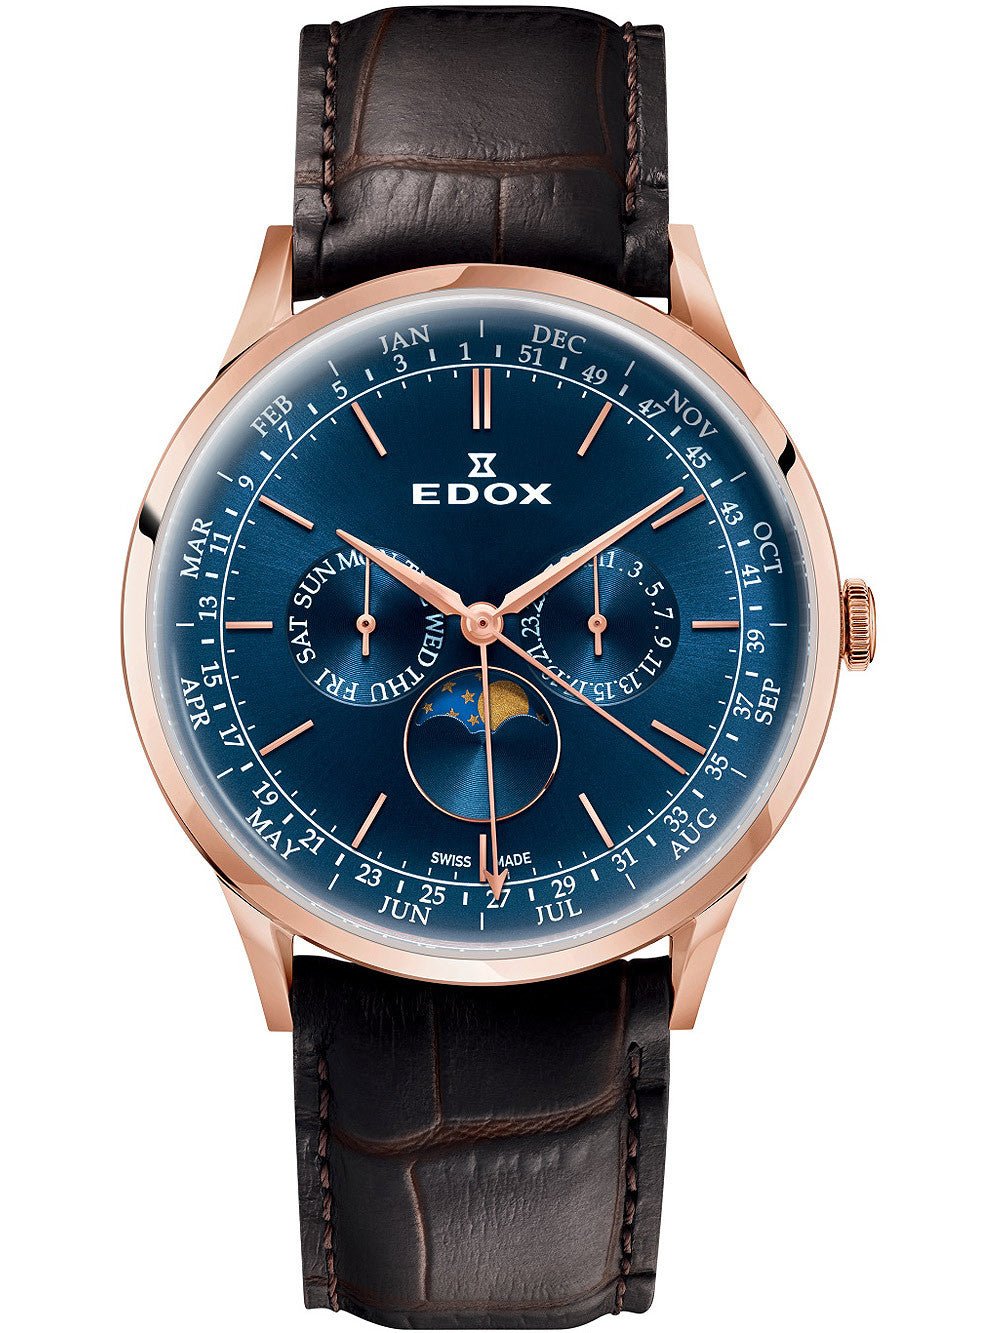 Edox Les Vauberts Annual Calendar – Edox Watches